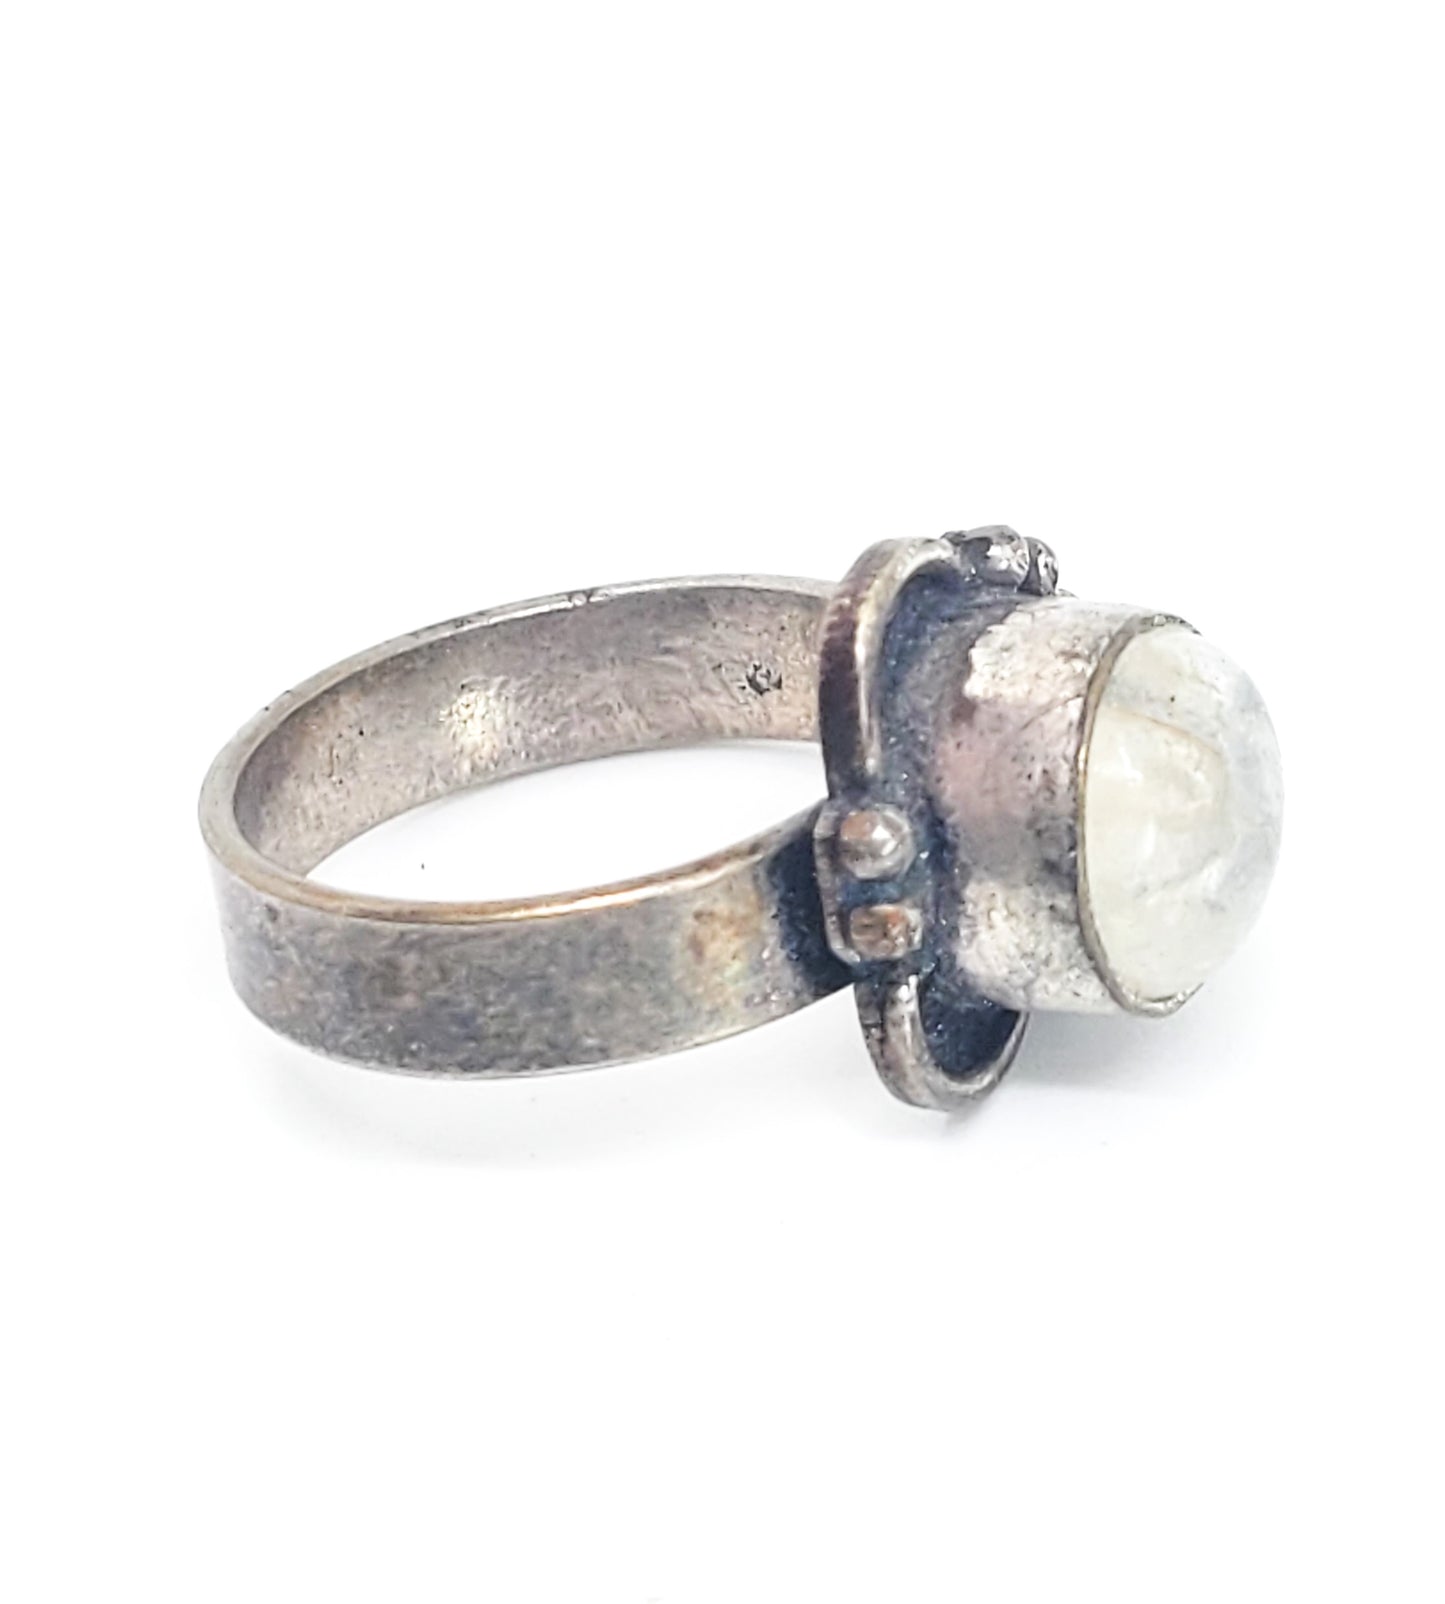 Garden Quartz Lodolite silver plated adjustable Balinese tribal style gemstone ring